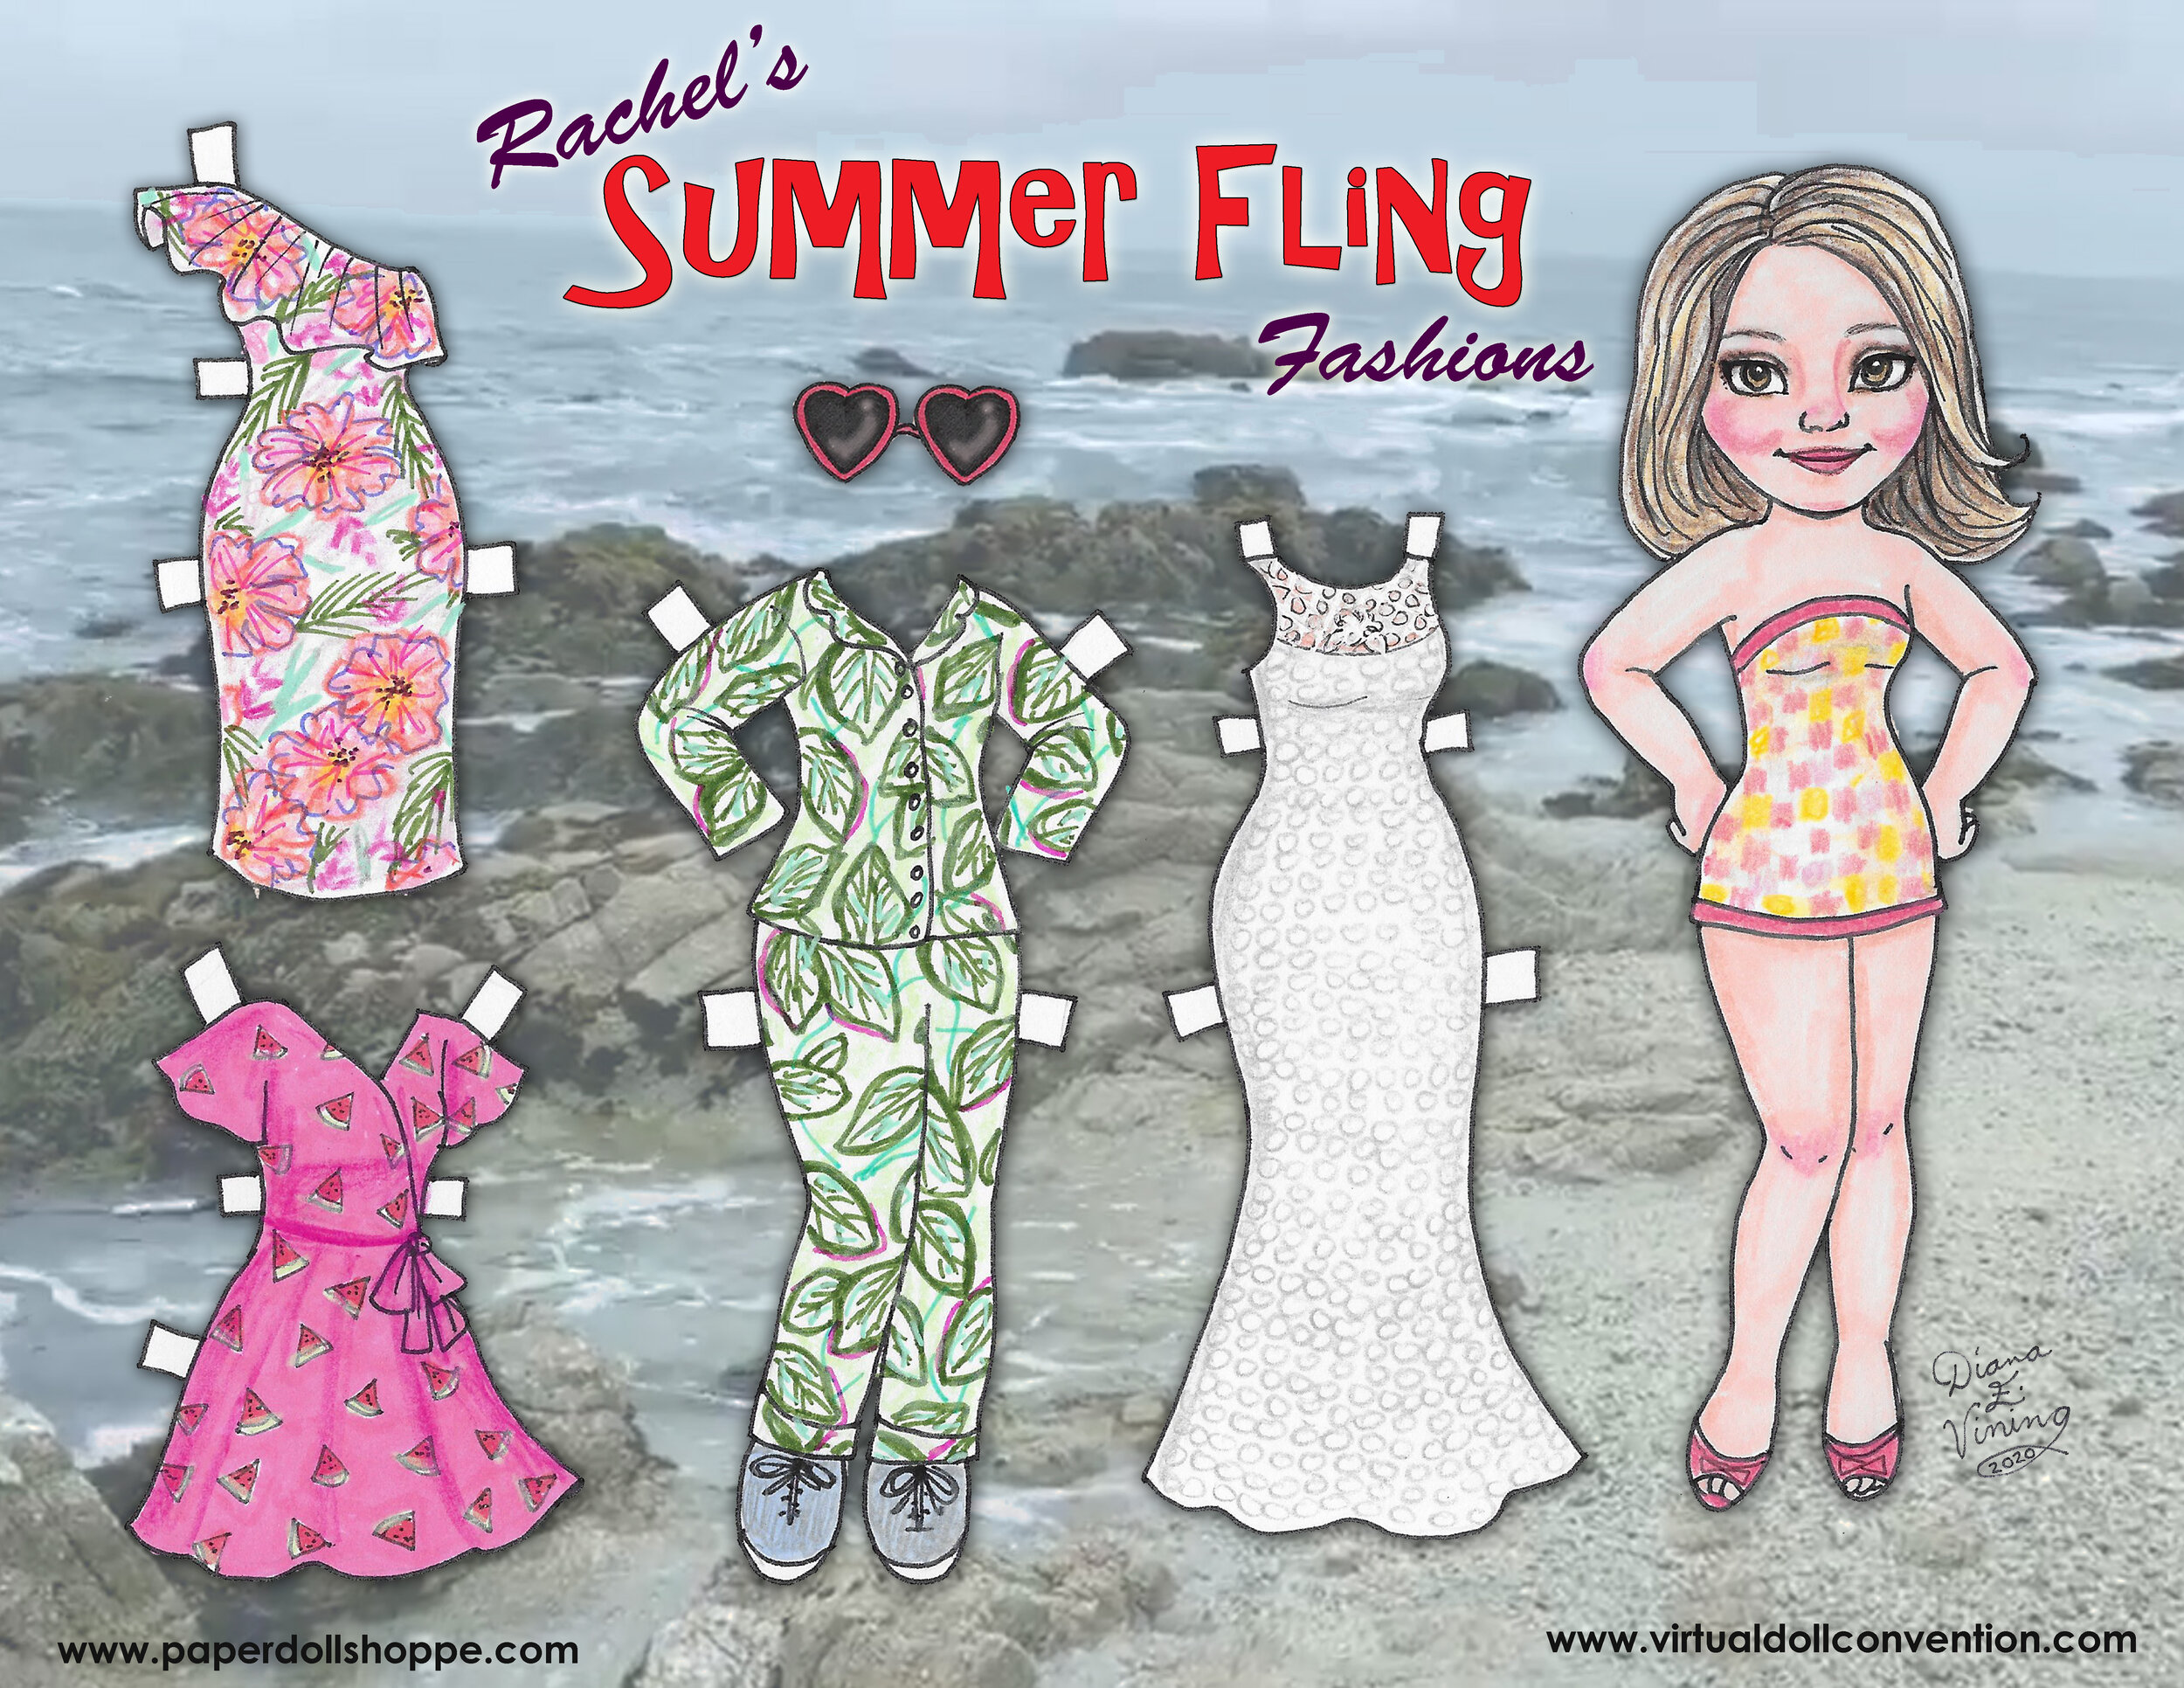 Rachel's Summer Fling Fashions Paper Doll.jpg